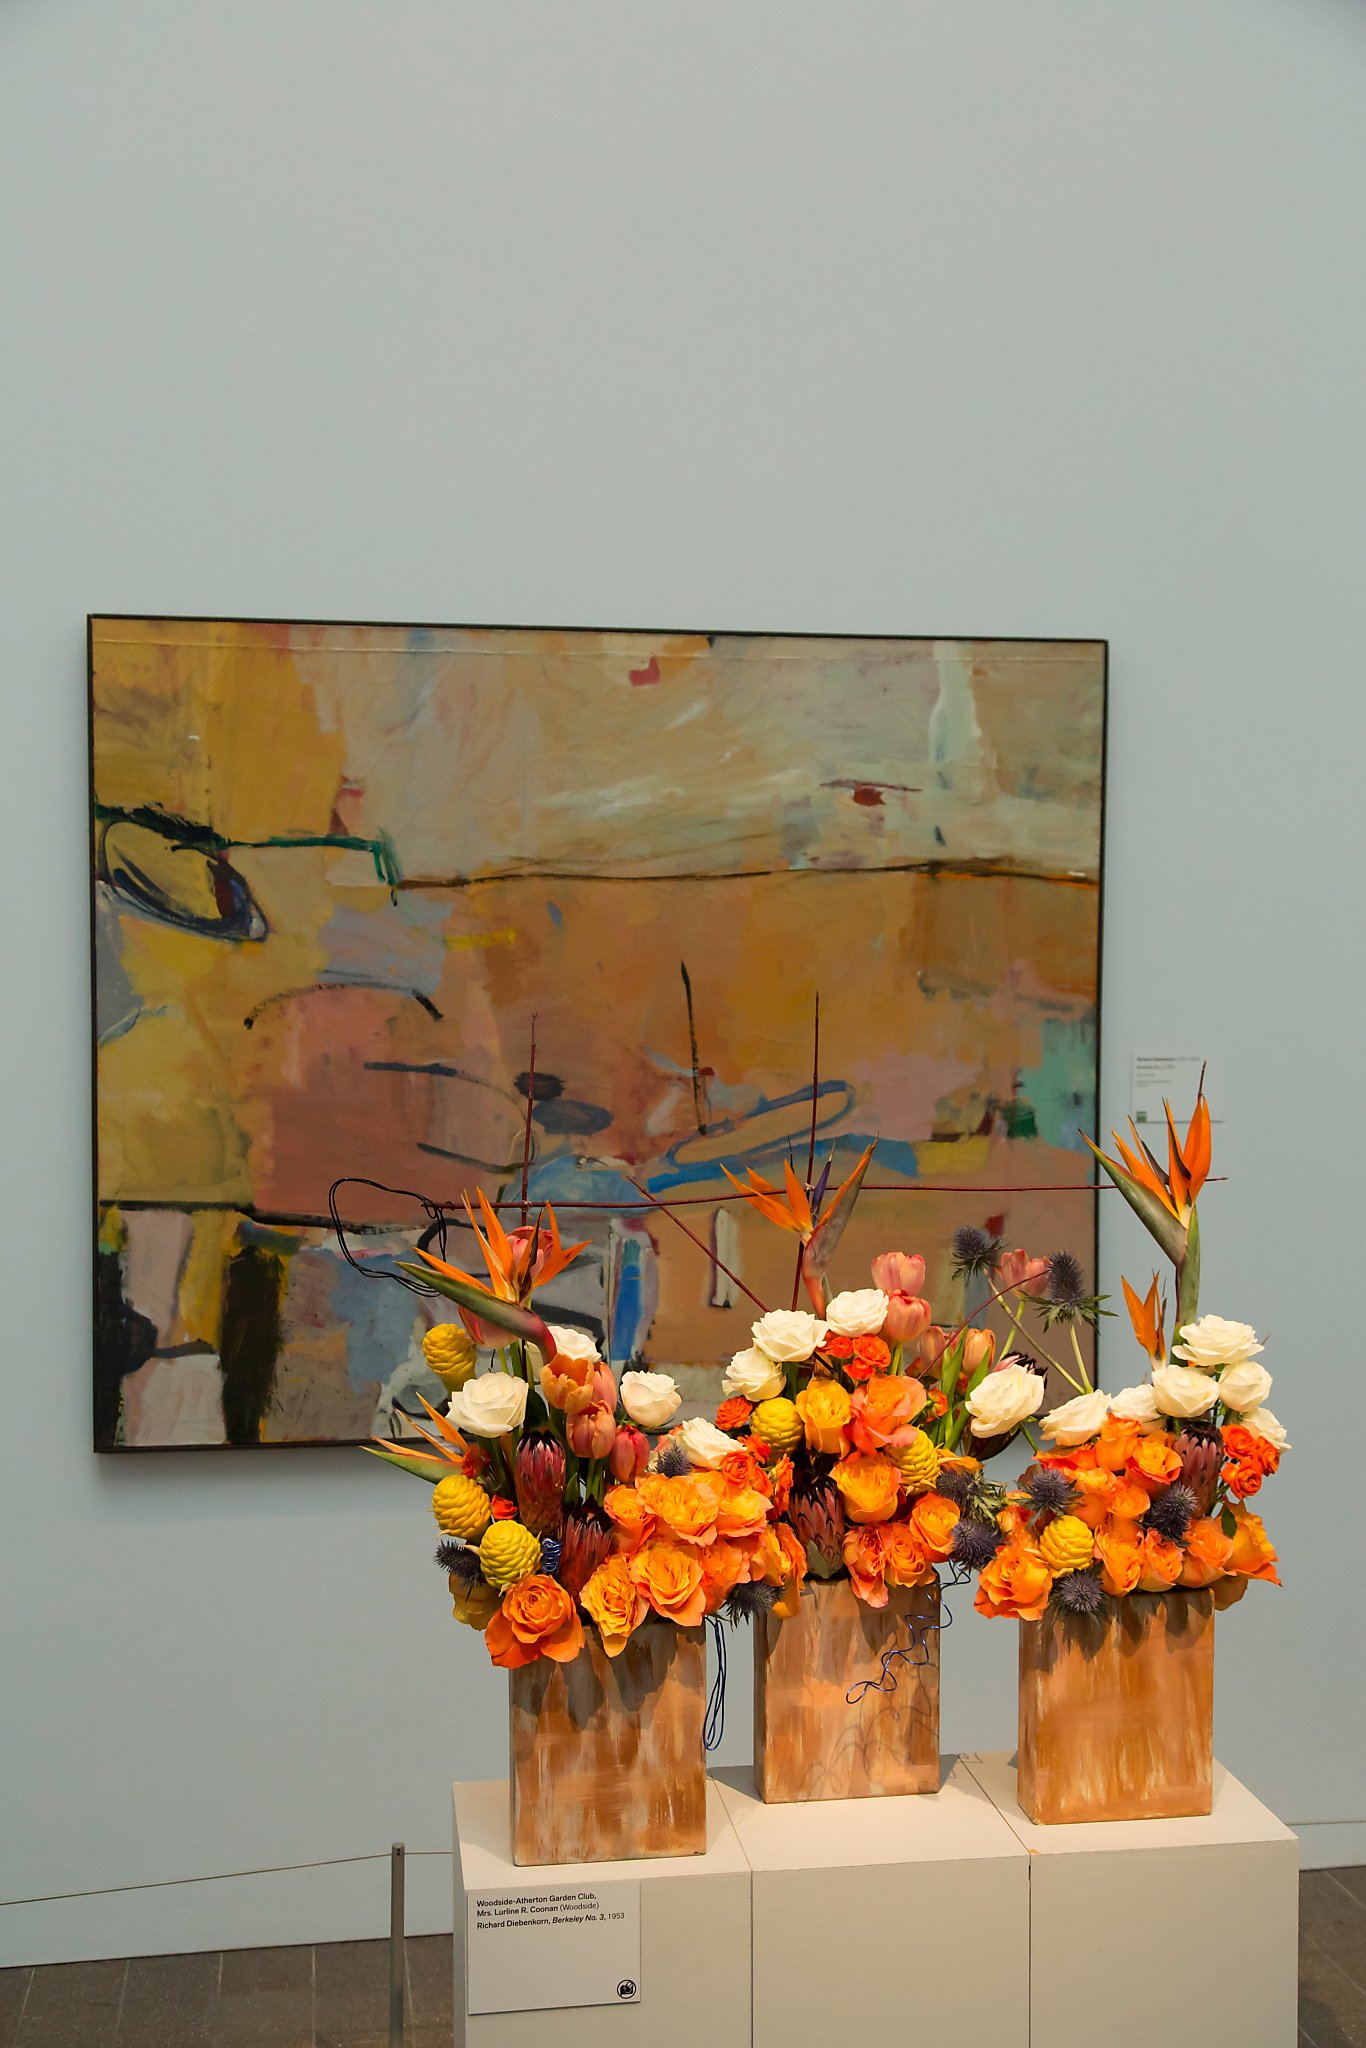 Bouquets to Art features 125 florists interpreting artworks